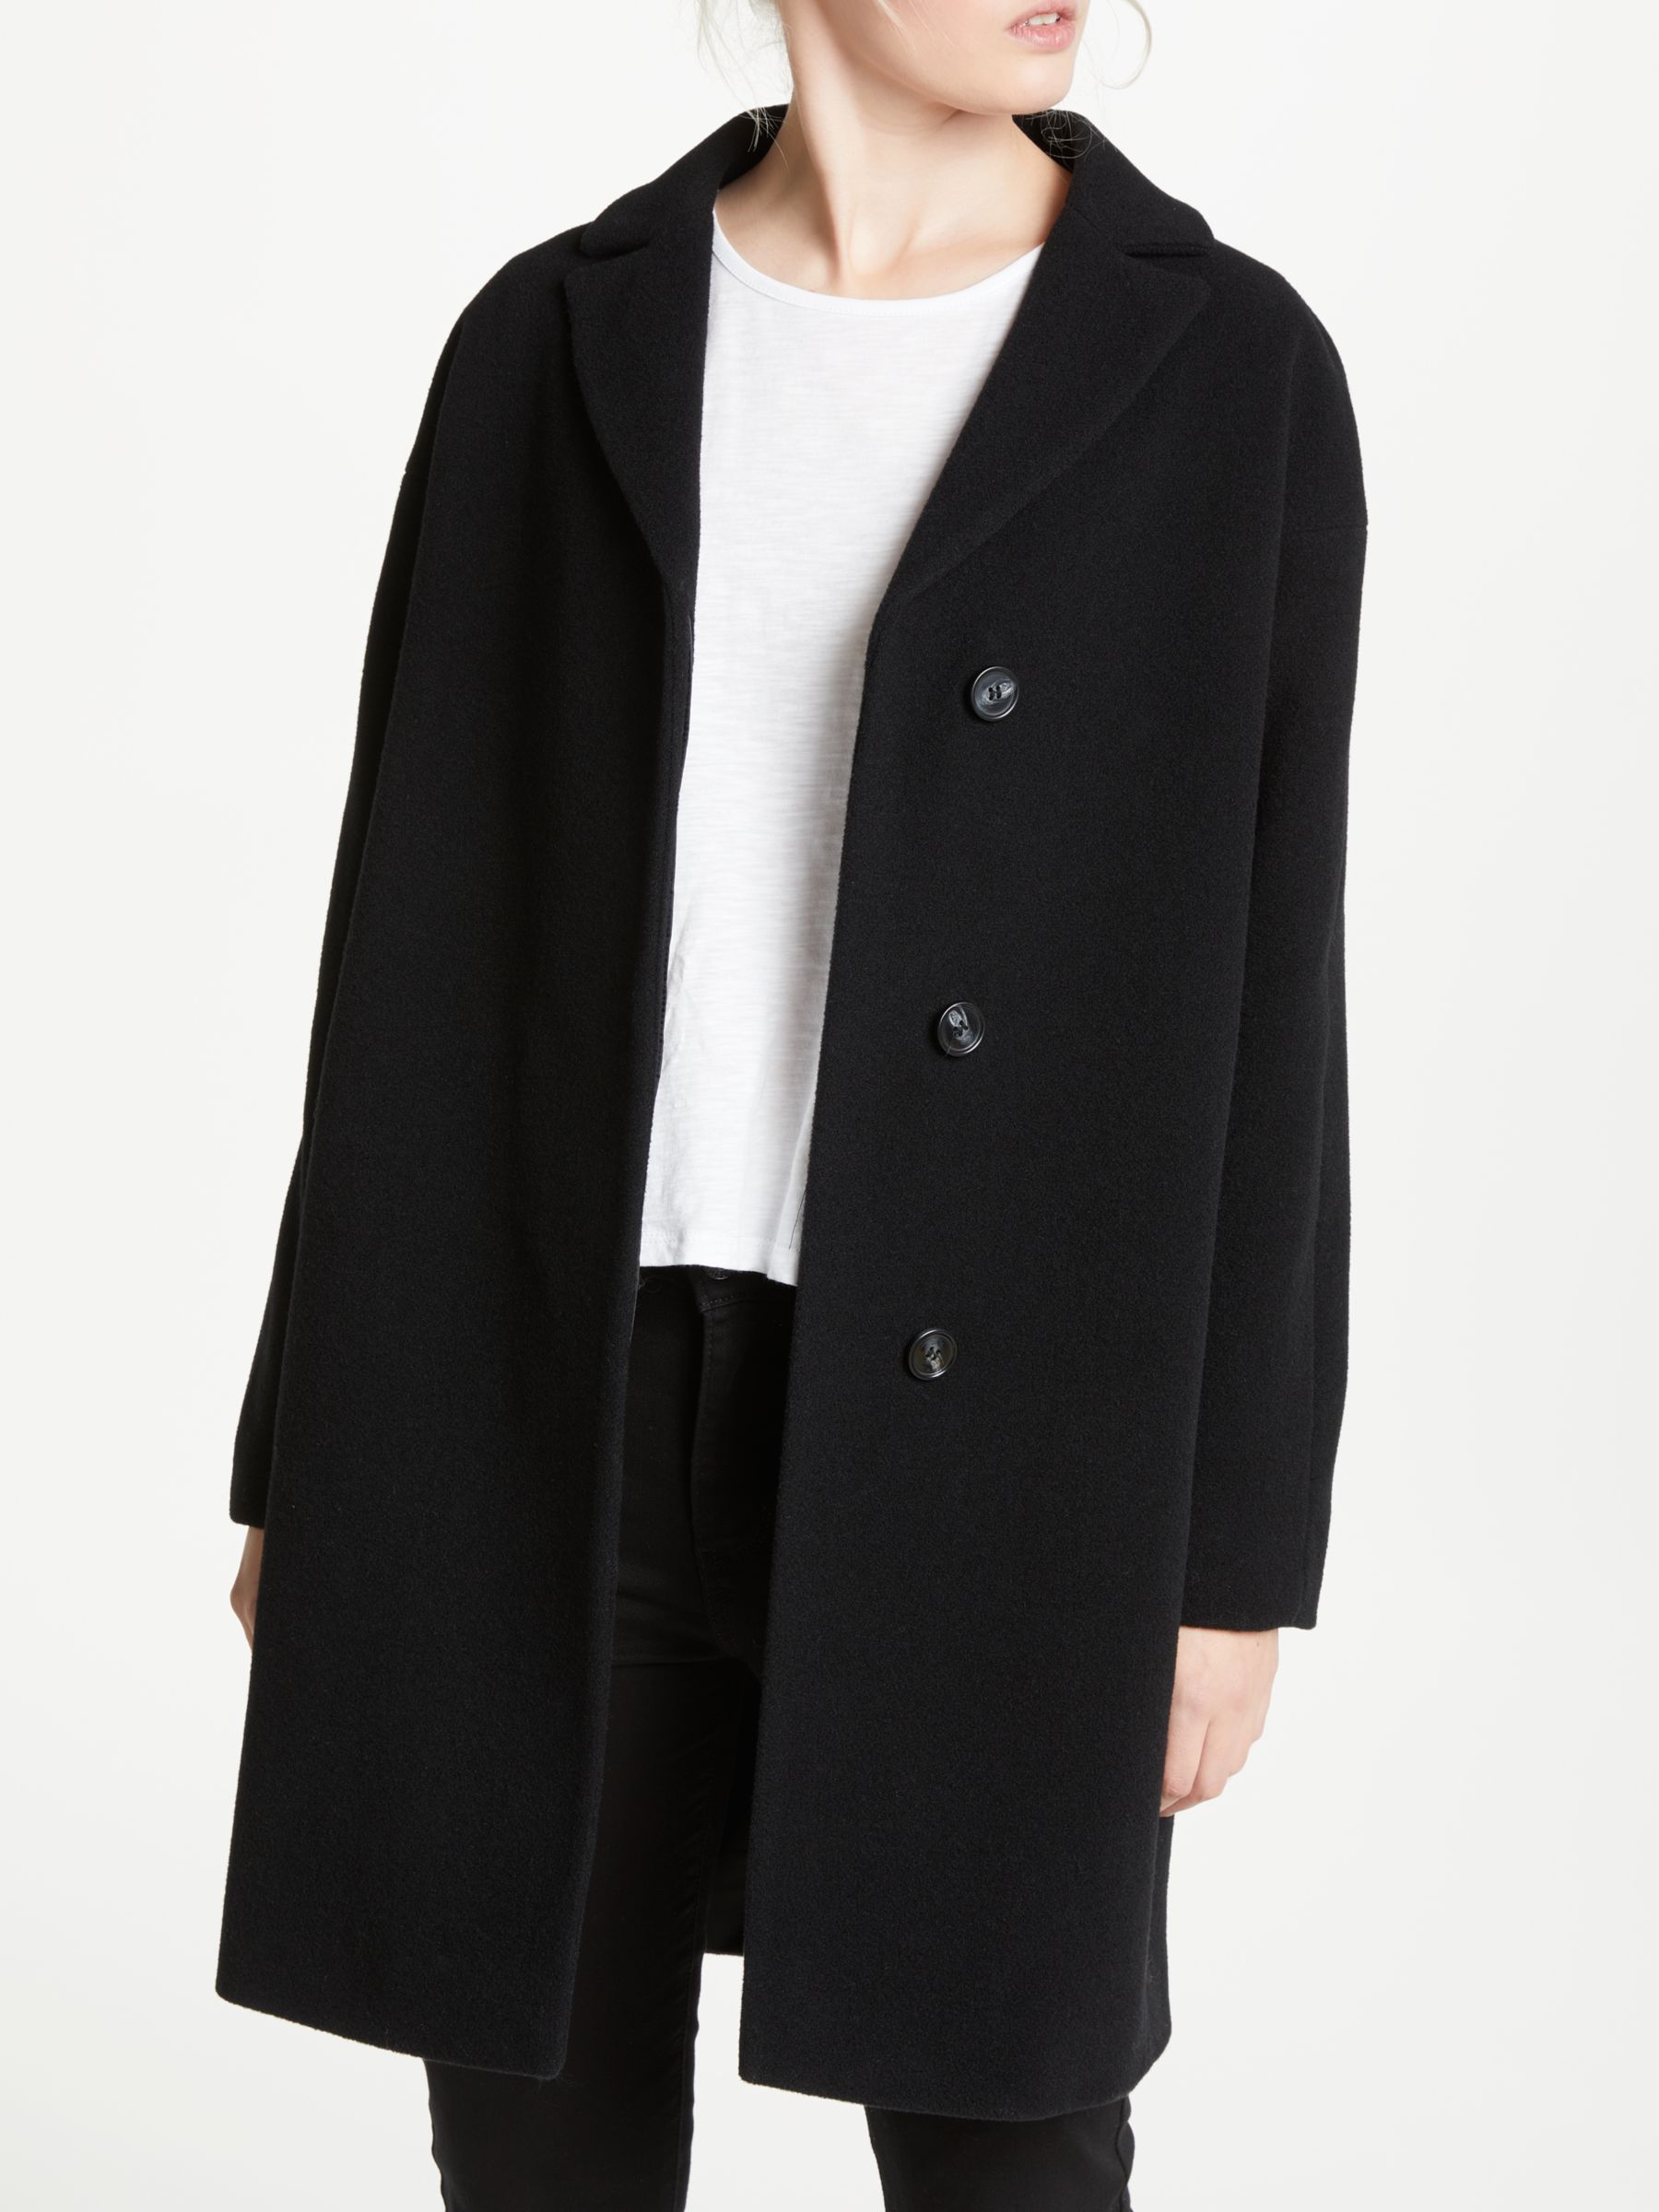 Black | Women's Coats & Jackets | John Lewis